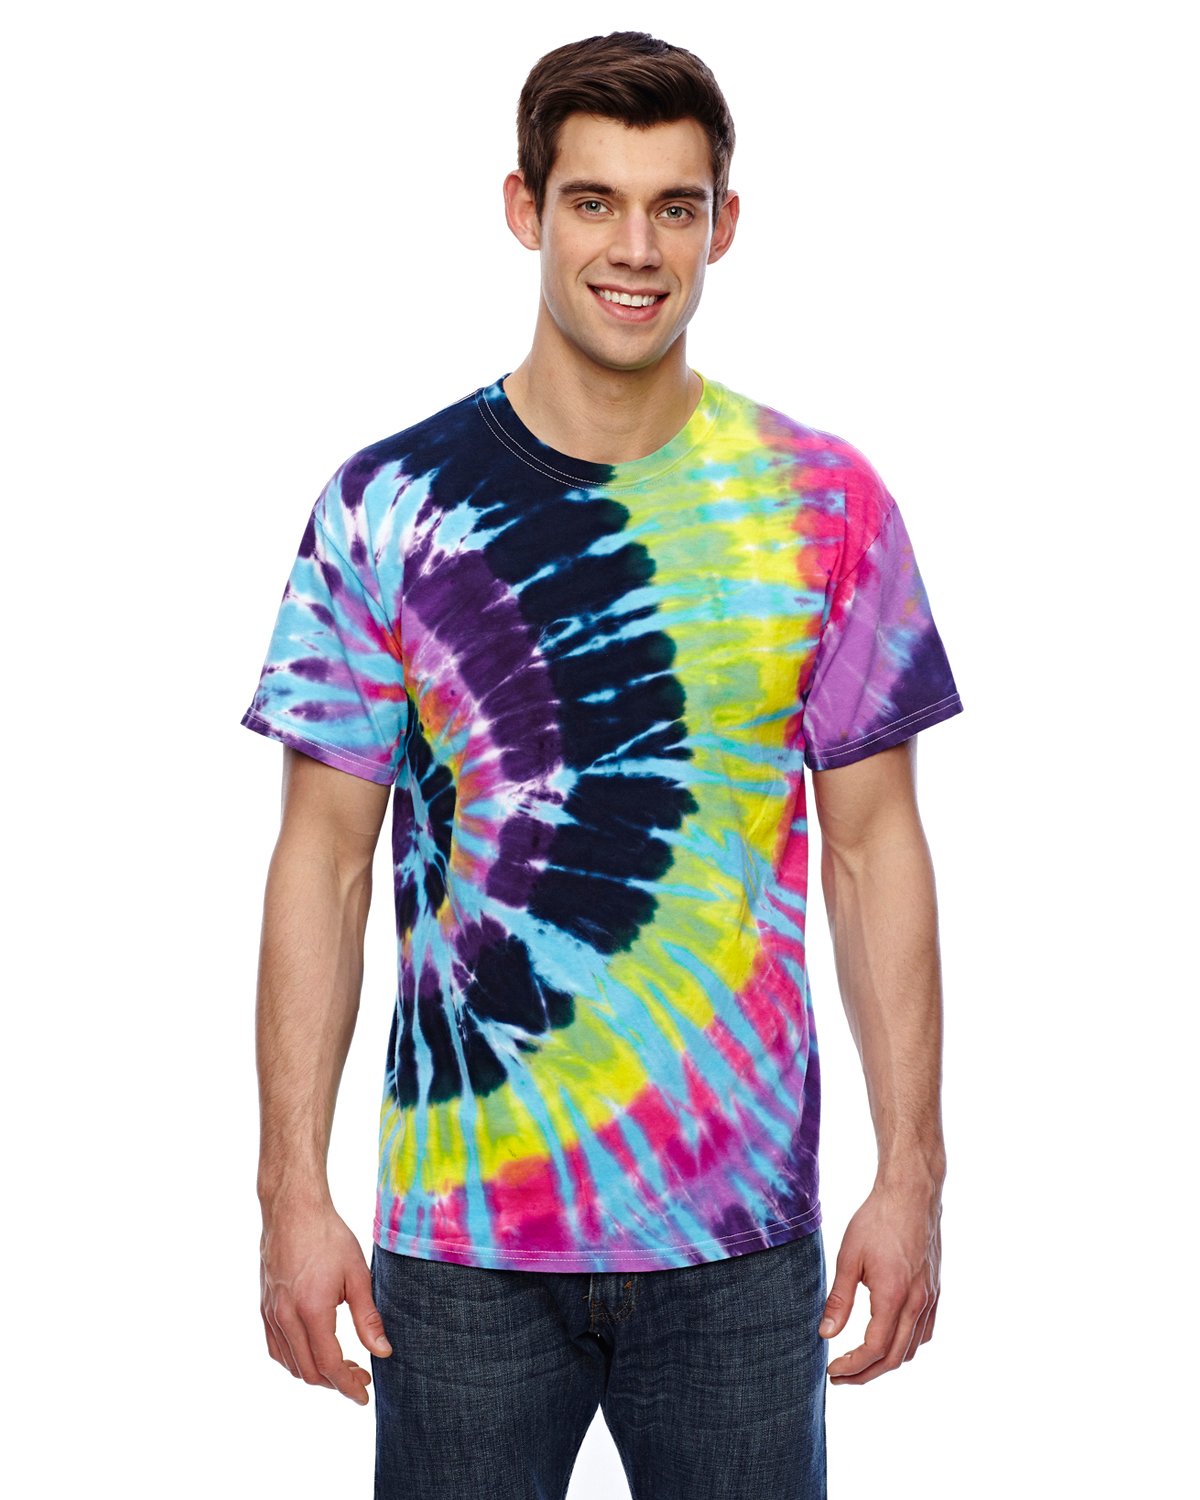 Colortone Flashback / S Apparel Apparel | Adult Tie-Dye T-shirt Wholesale Craft Sign Vinyl Monroe GA 30656